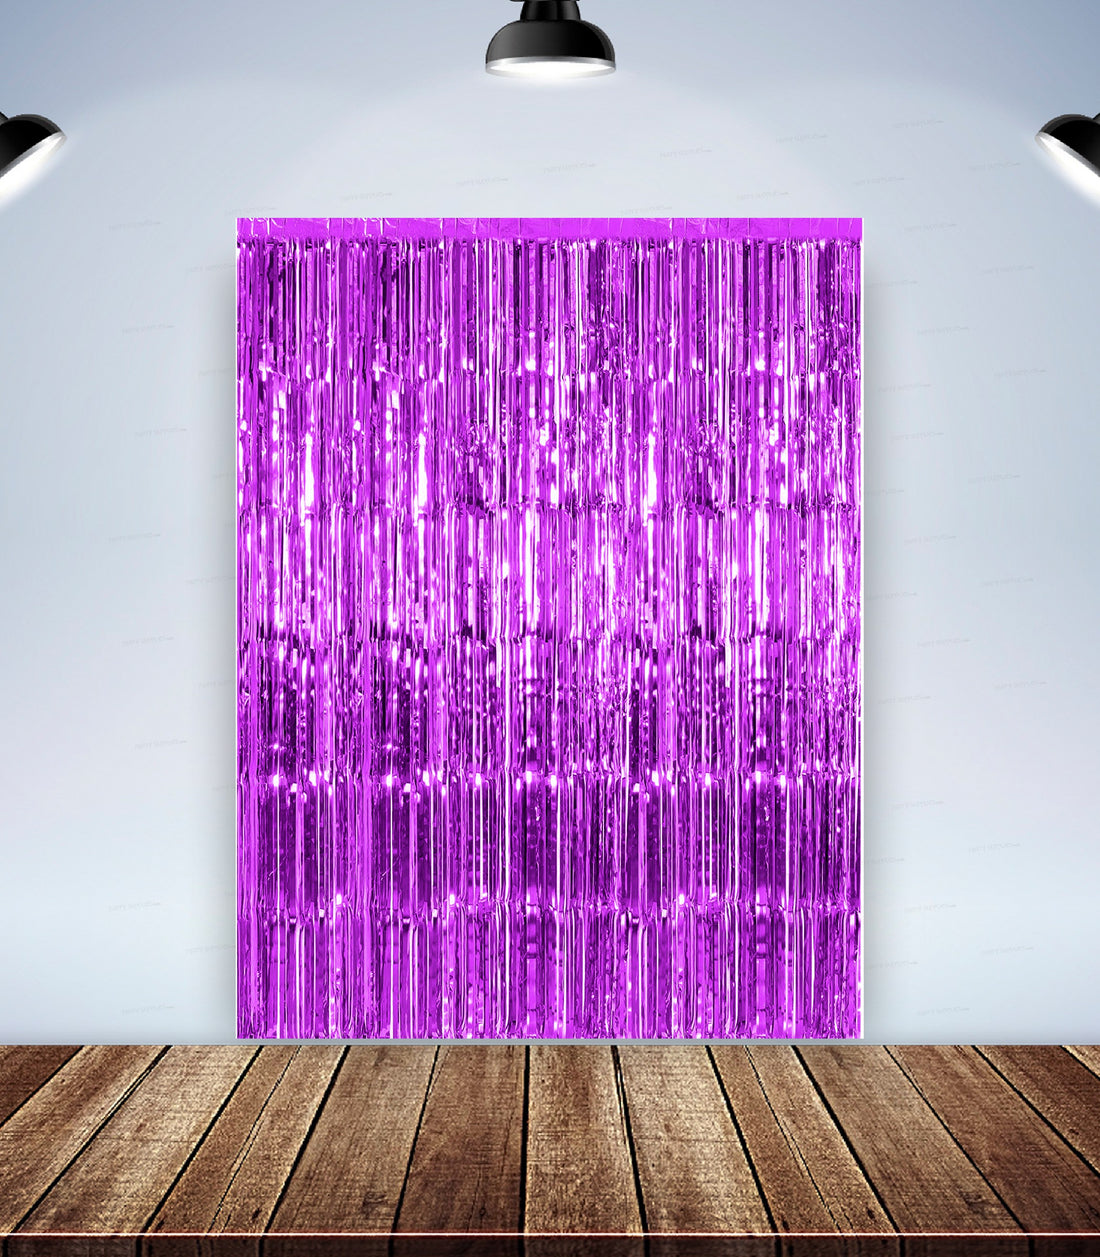 PSI Party Metallic Purple Shimmer Curtain